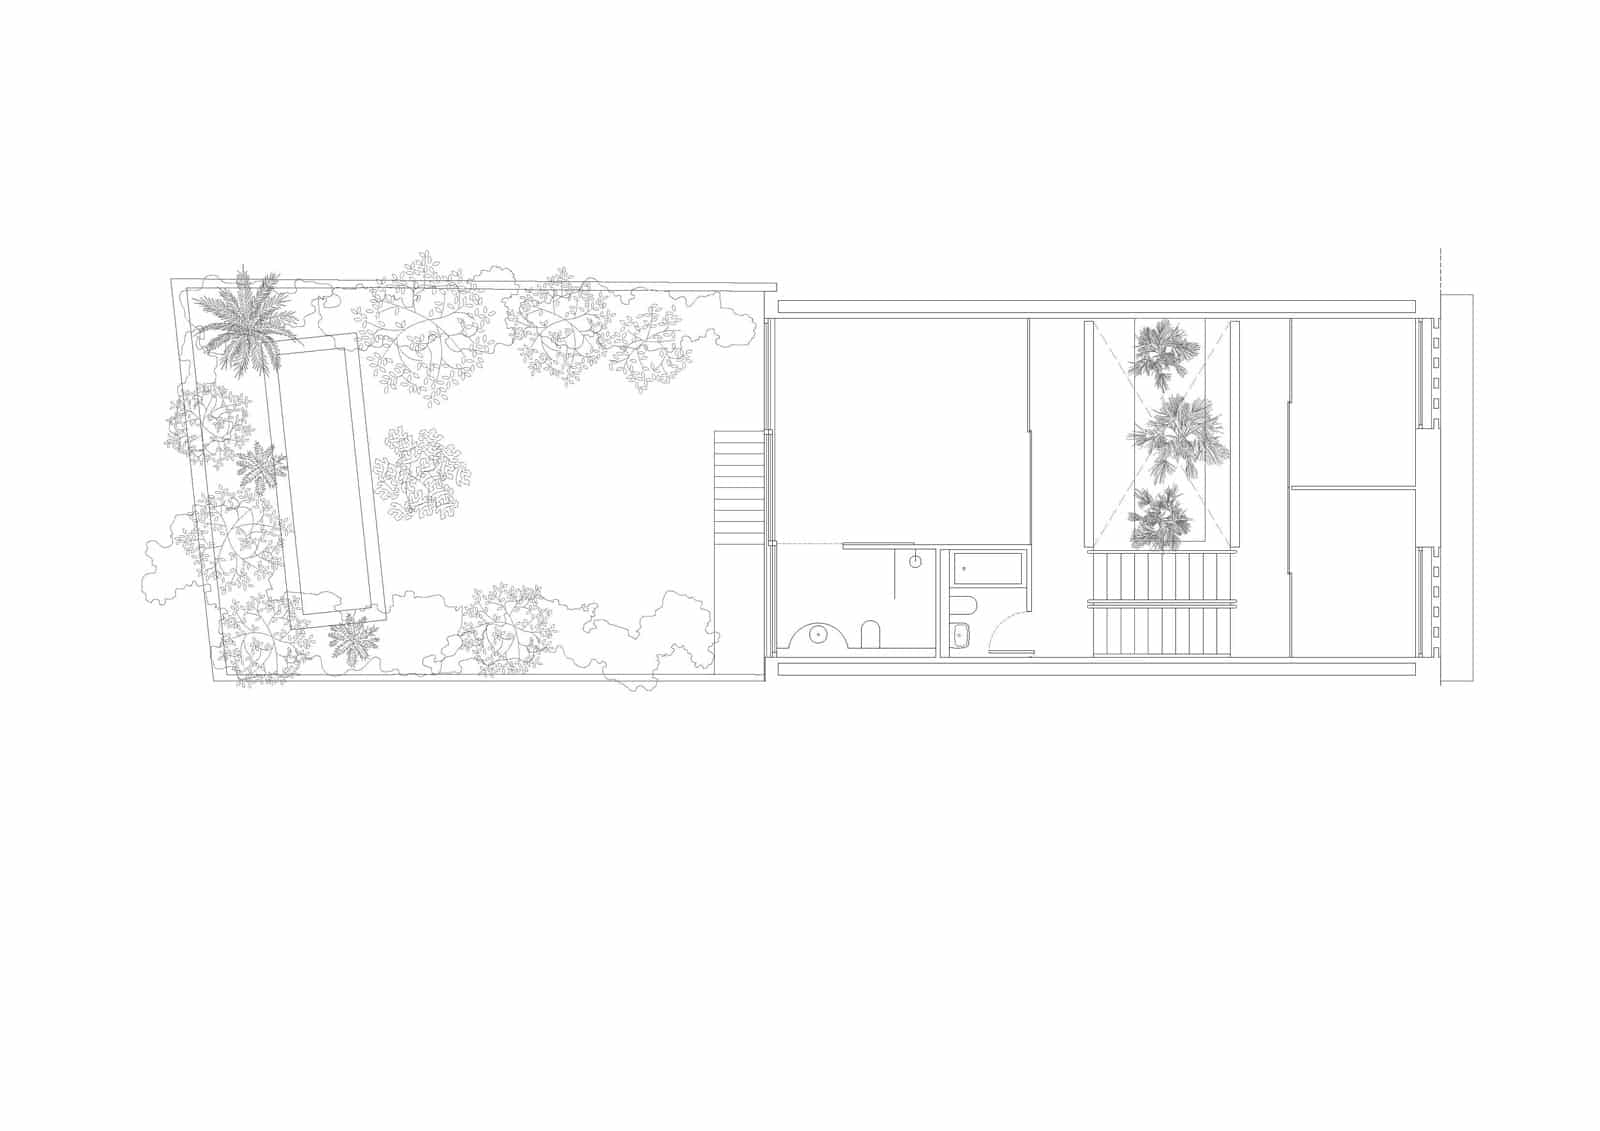 Image of 20220211 ArquitecturaG VerdiHouse 9.3 1 in Verdi House - Cosentino